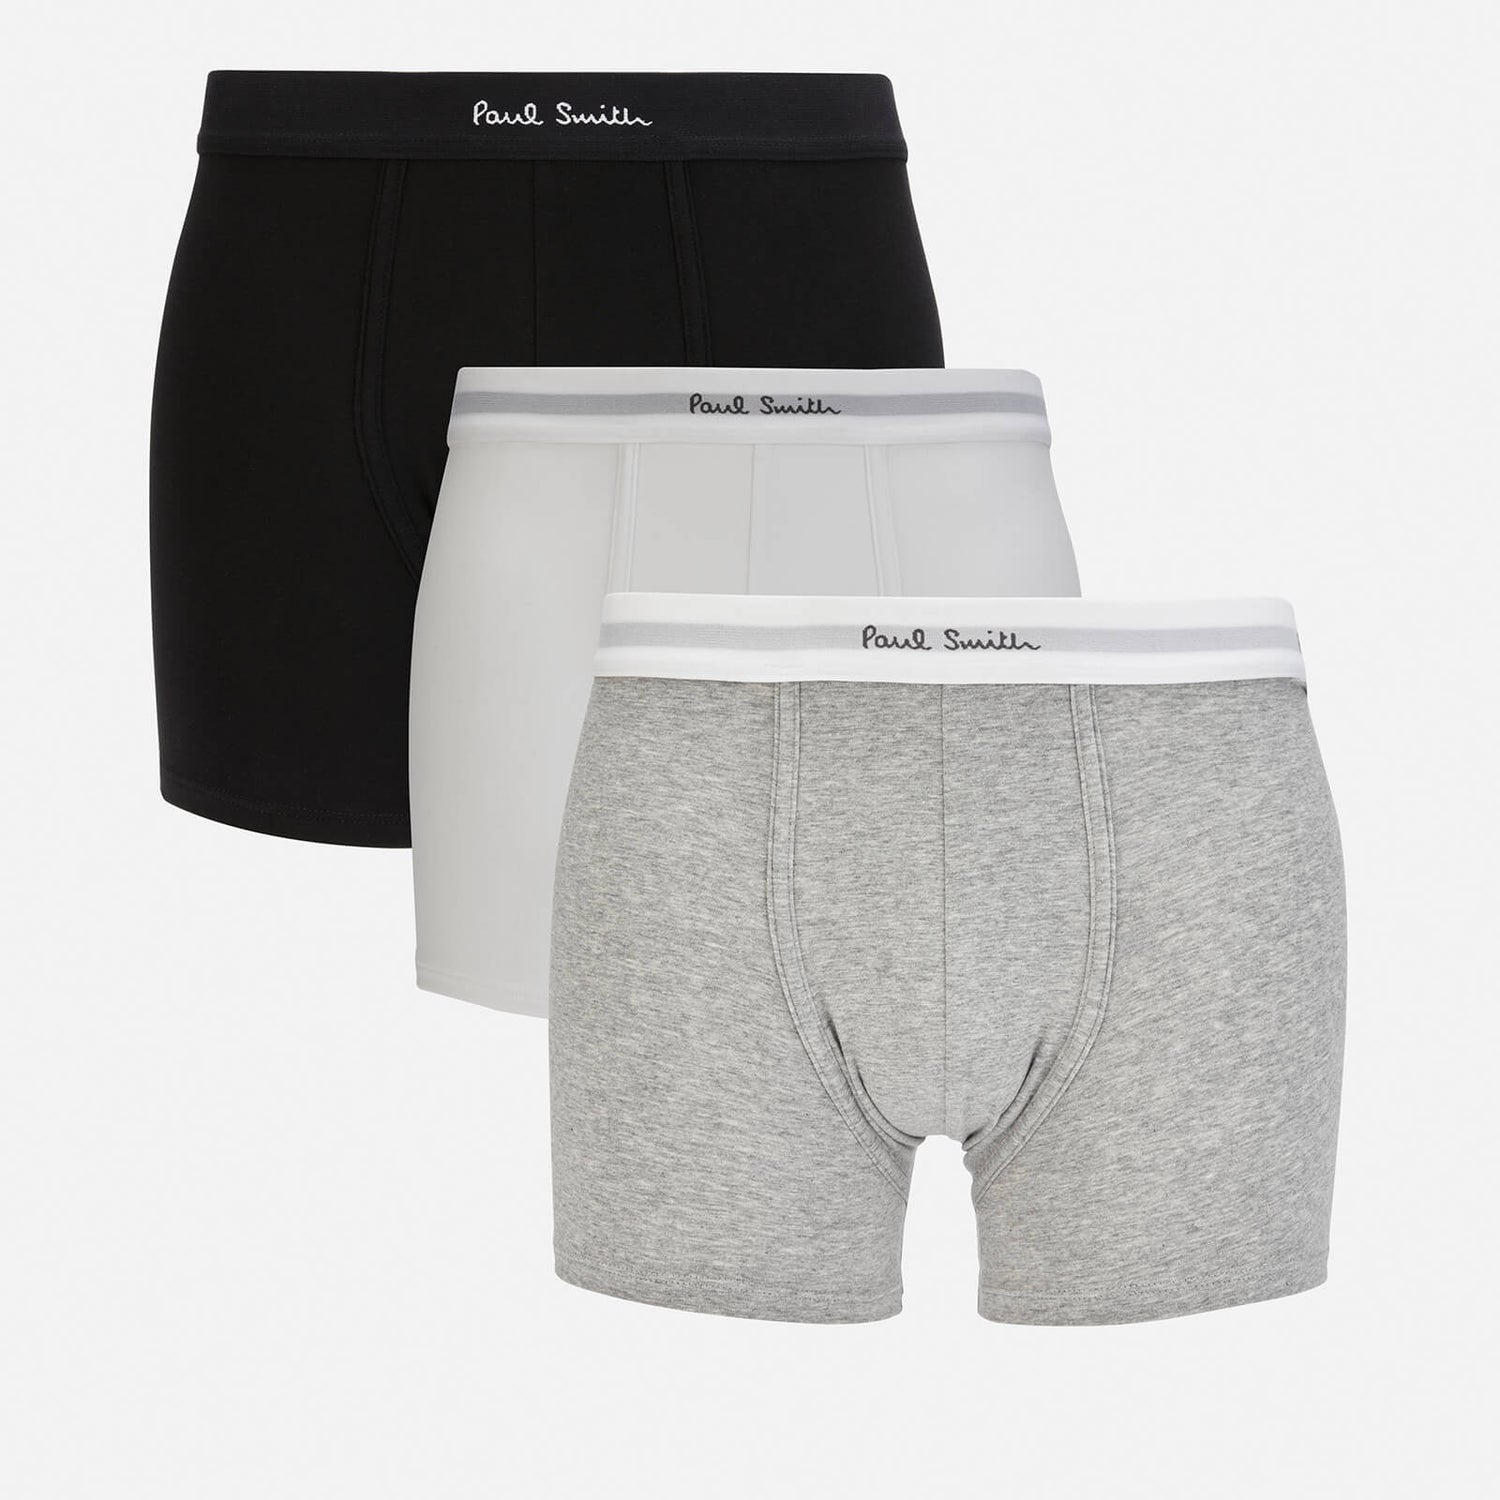 PS Paul Smith Men's 3-Pack Boxer Briefs - Black/Grey/White